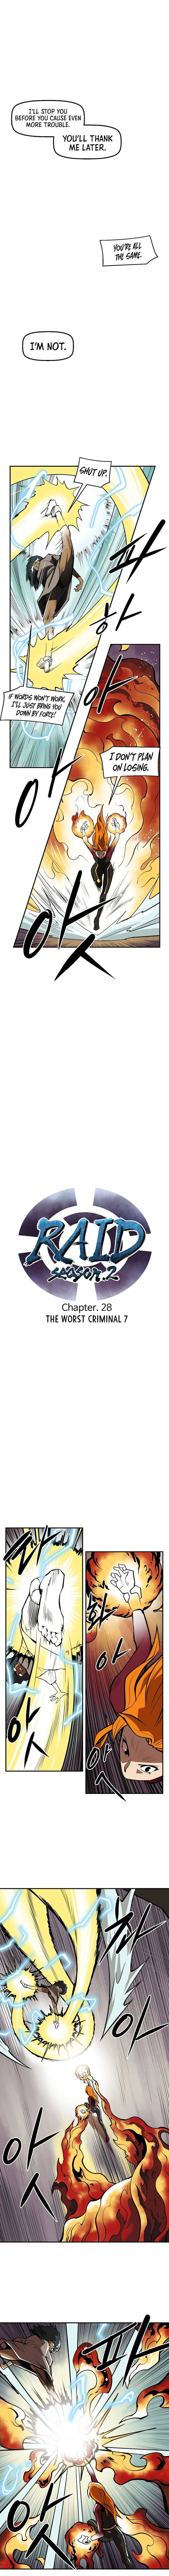 Raid - Chapter 87 Page 2